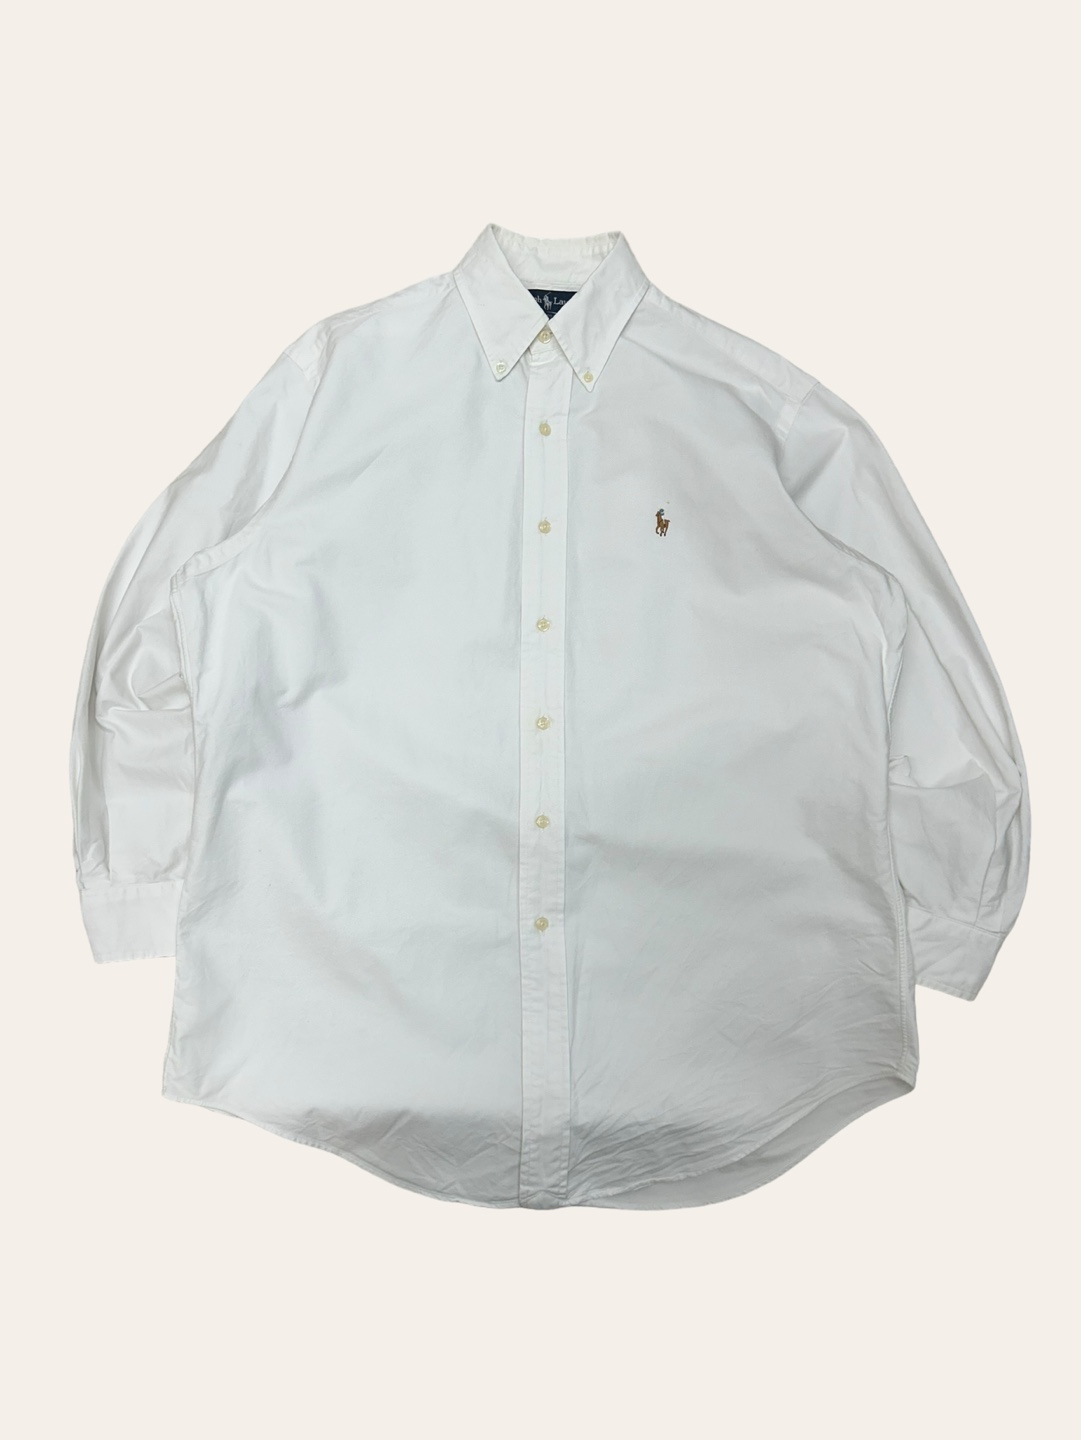 (From USA)Polo ralph lauren white oxford shirt 15.5